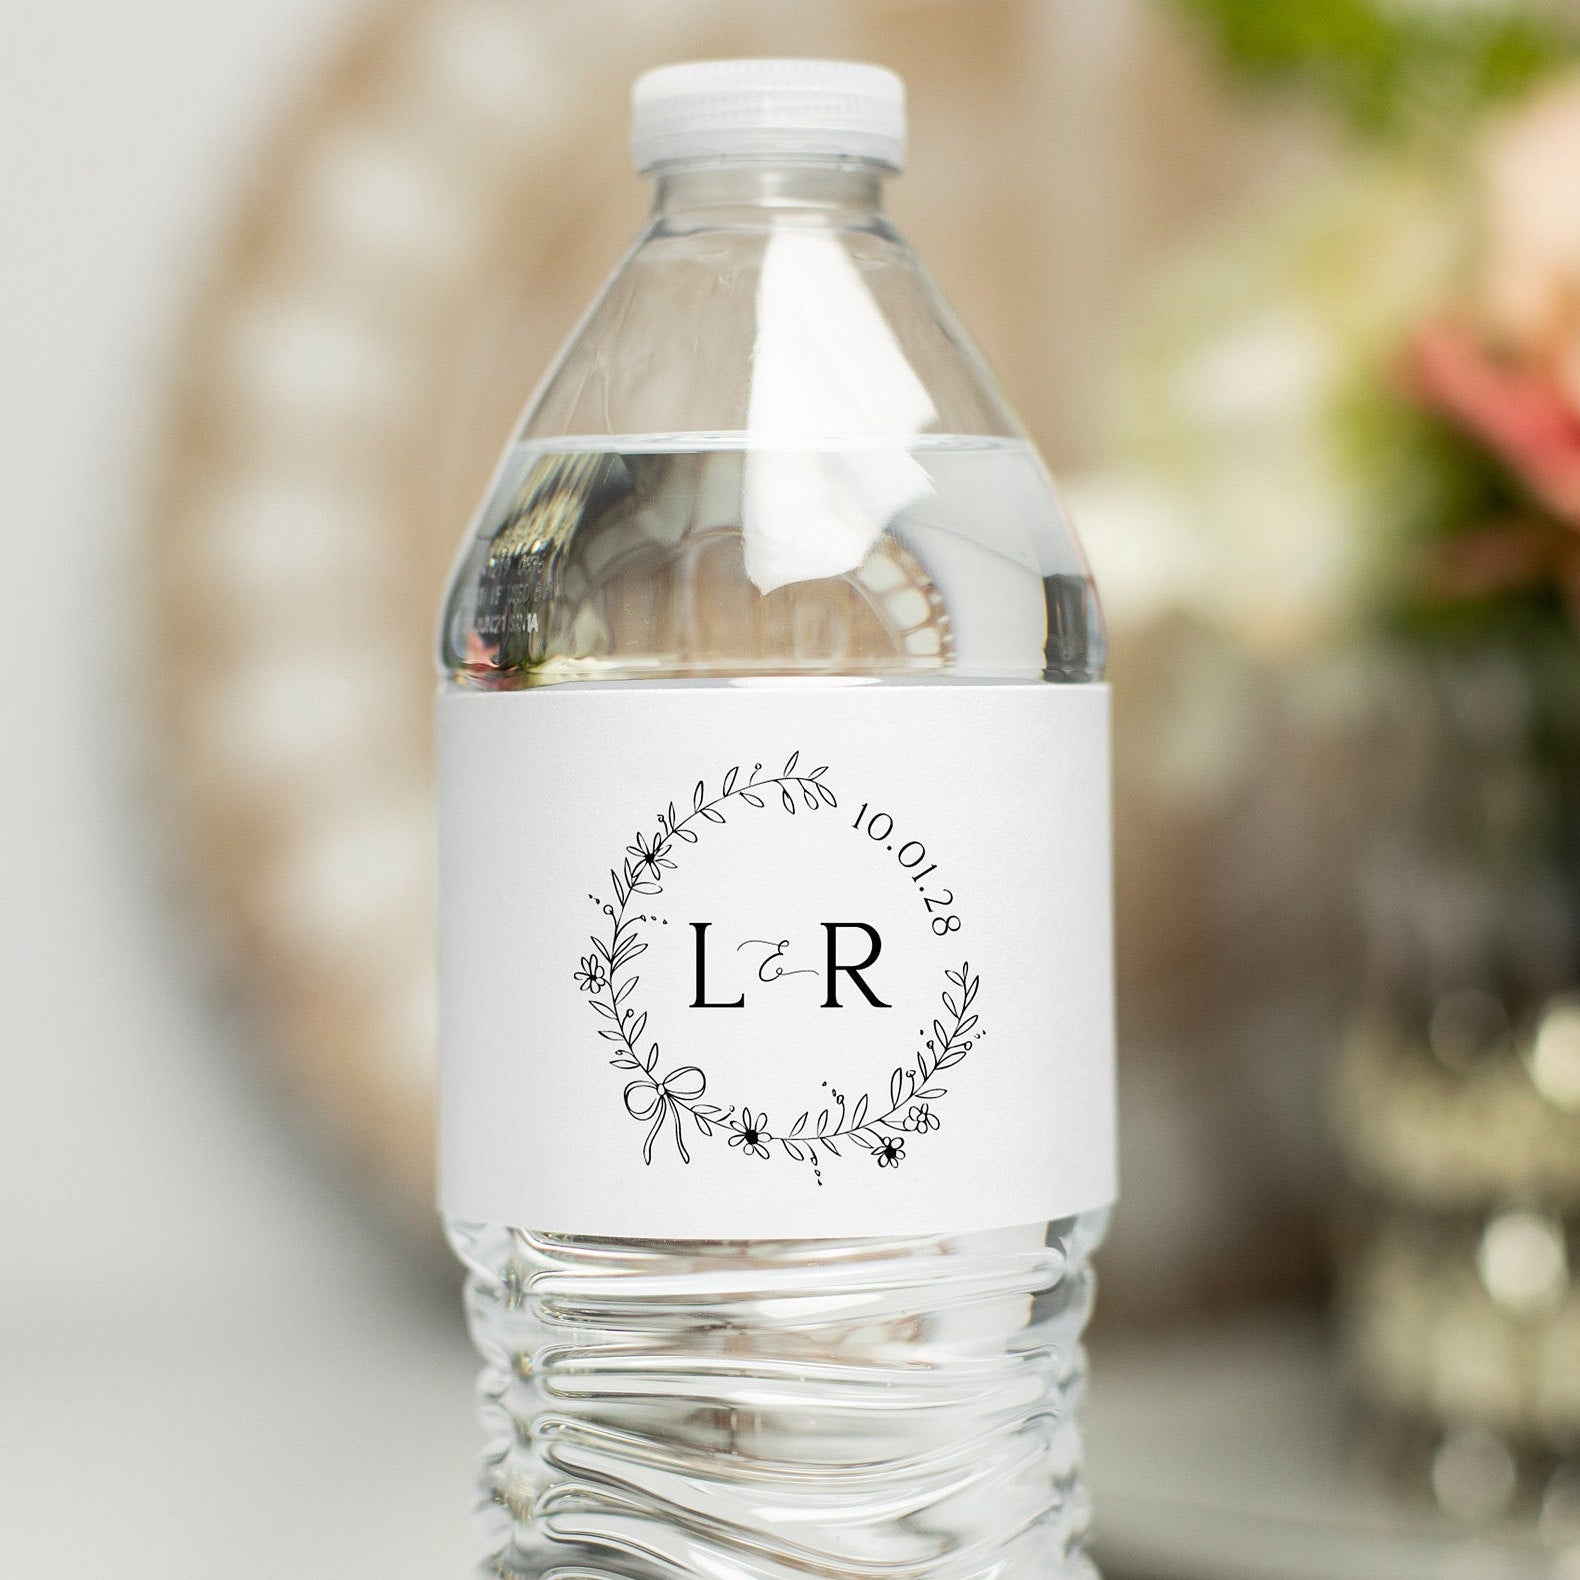 Water Bottle Labels - Custom Water Bottle Labels, Your Logo printed on labels, Business Water Bottle Labels, Company Logo, Wedding Monogram